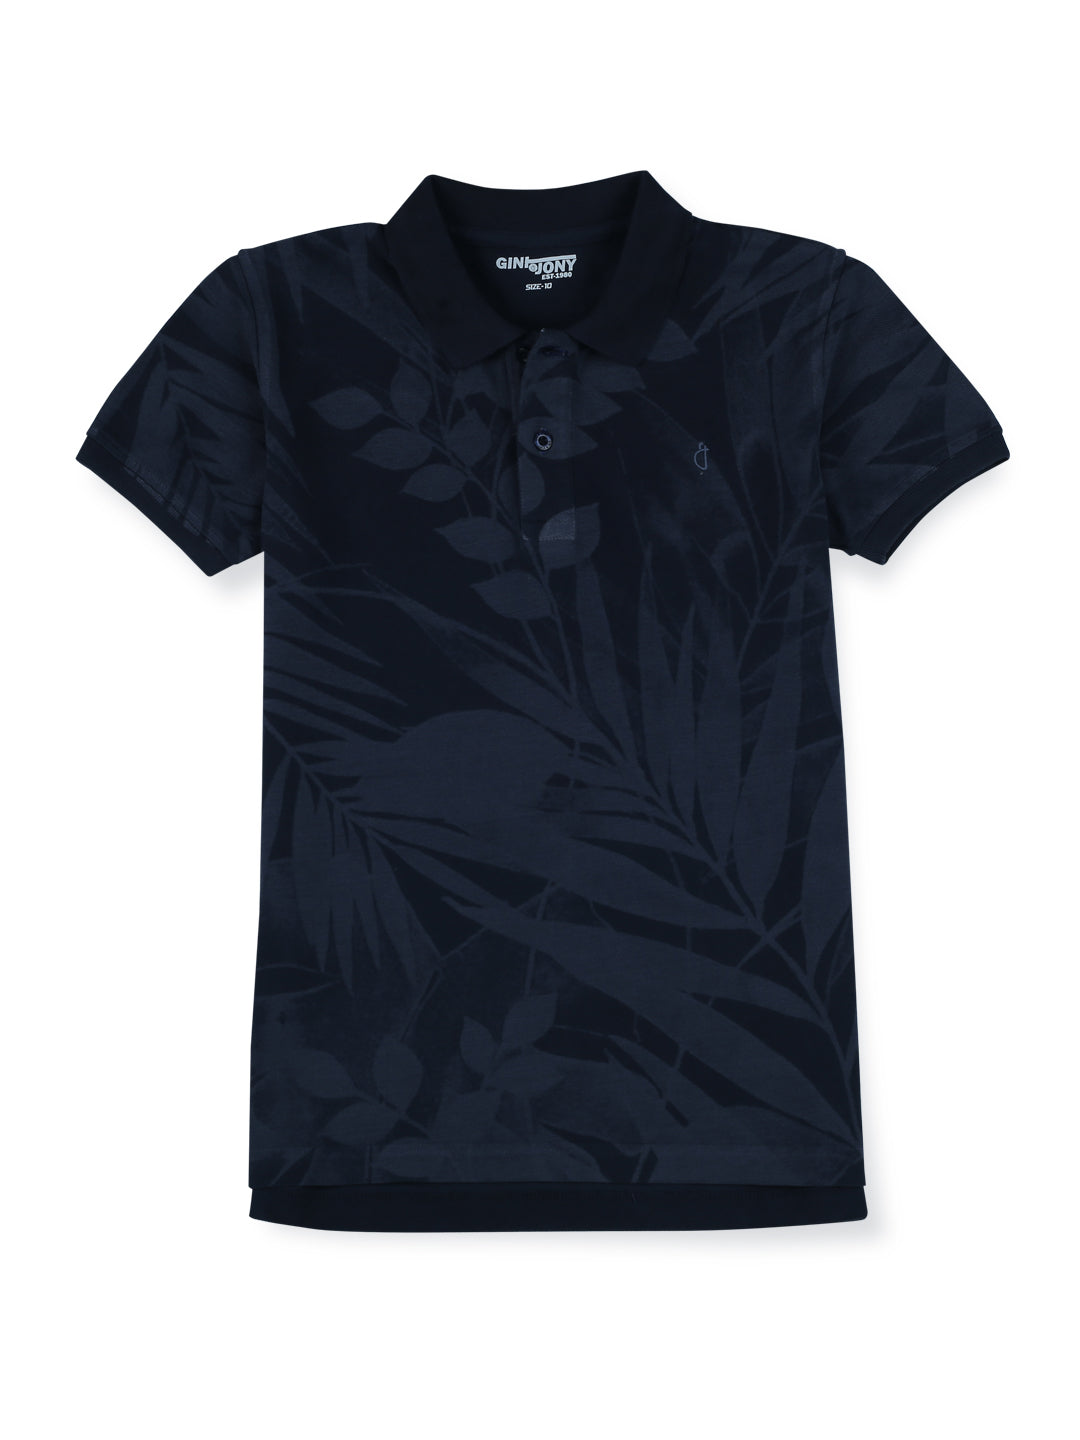 Boys Navy Blue Cotton Printed Polo T-Shirt